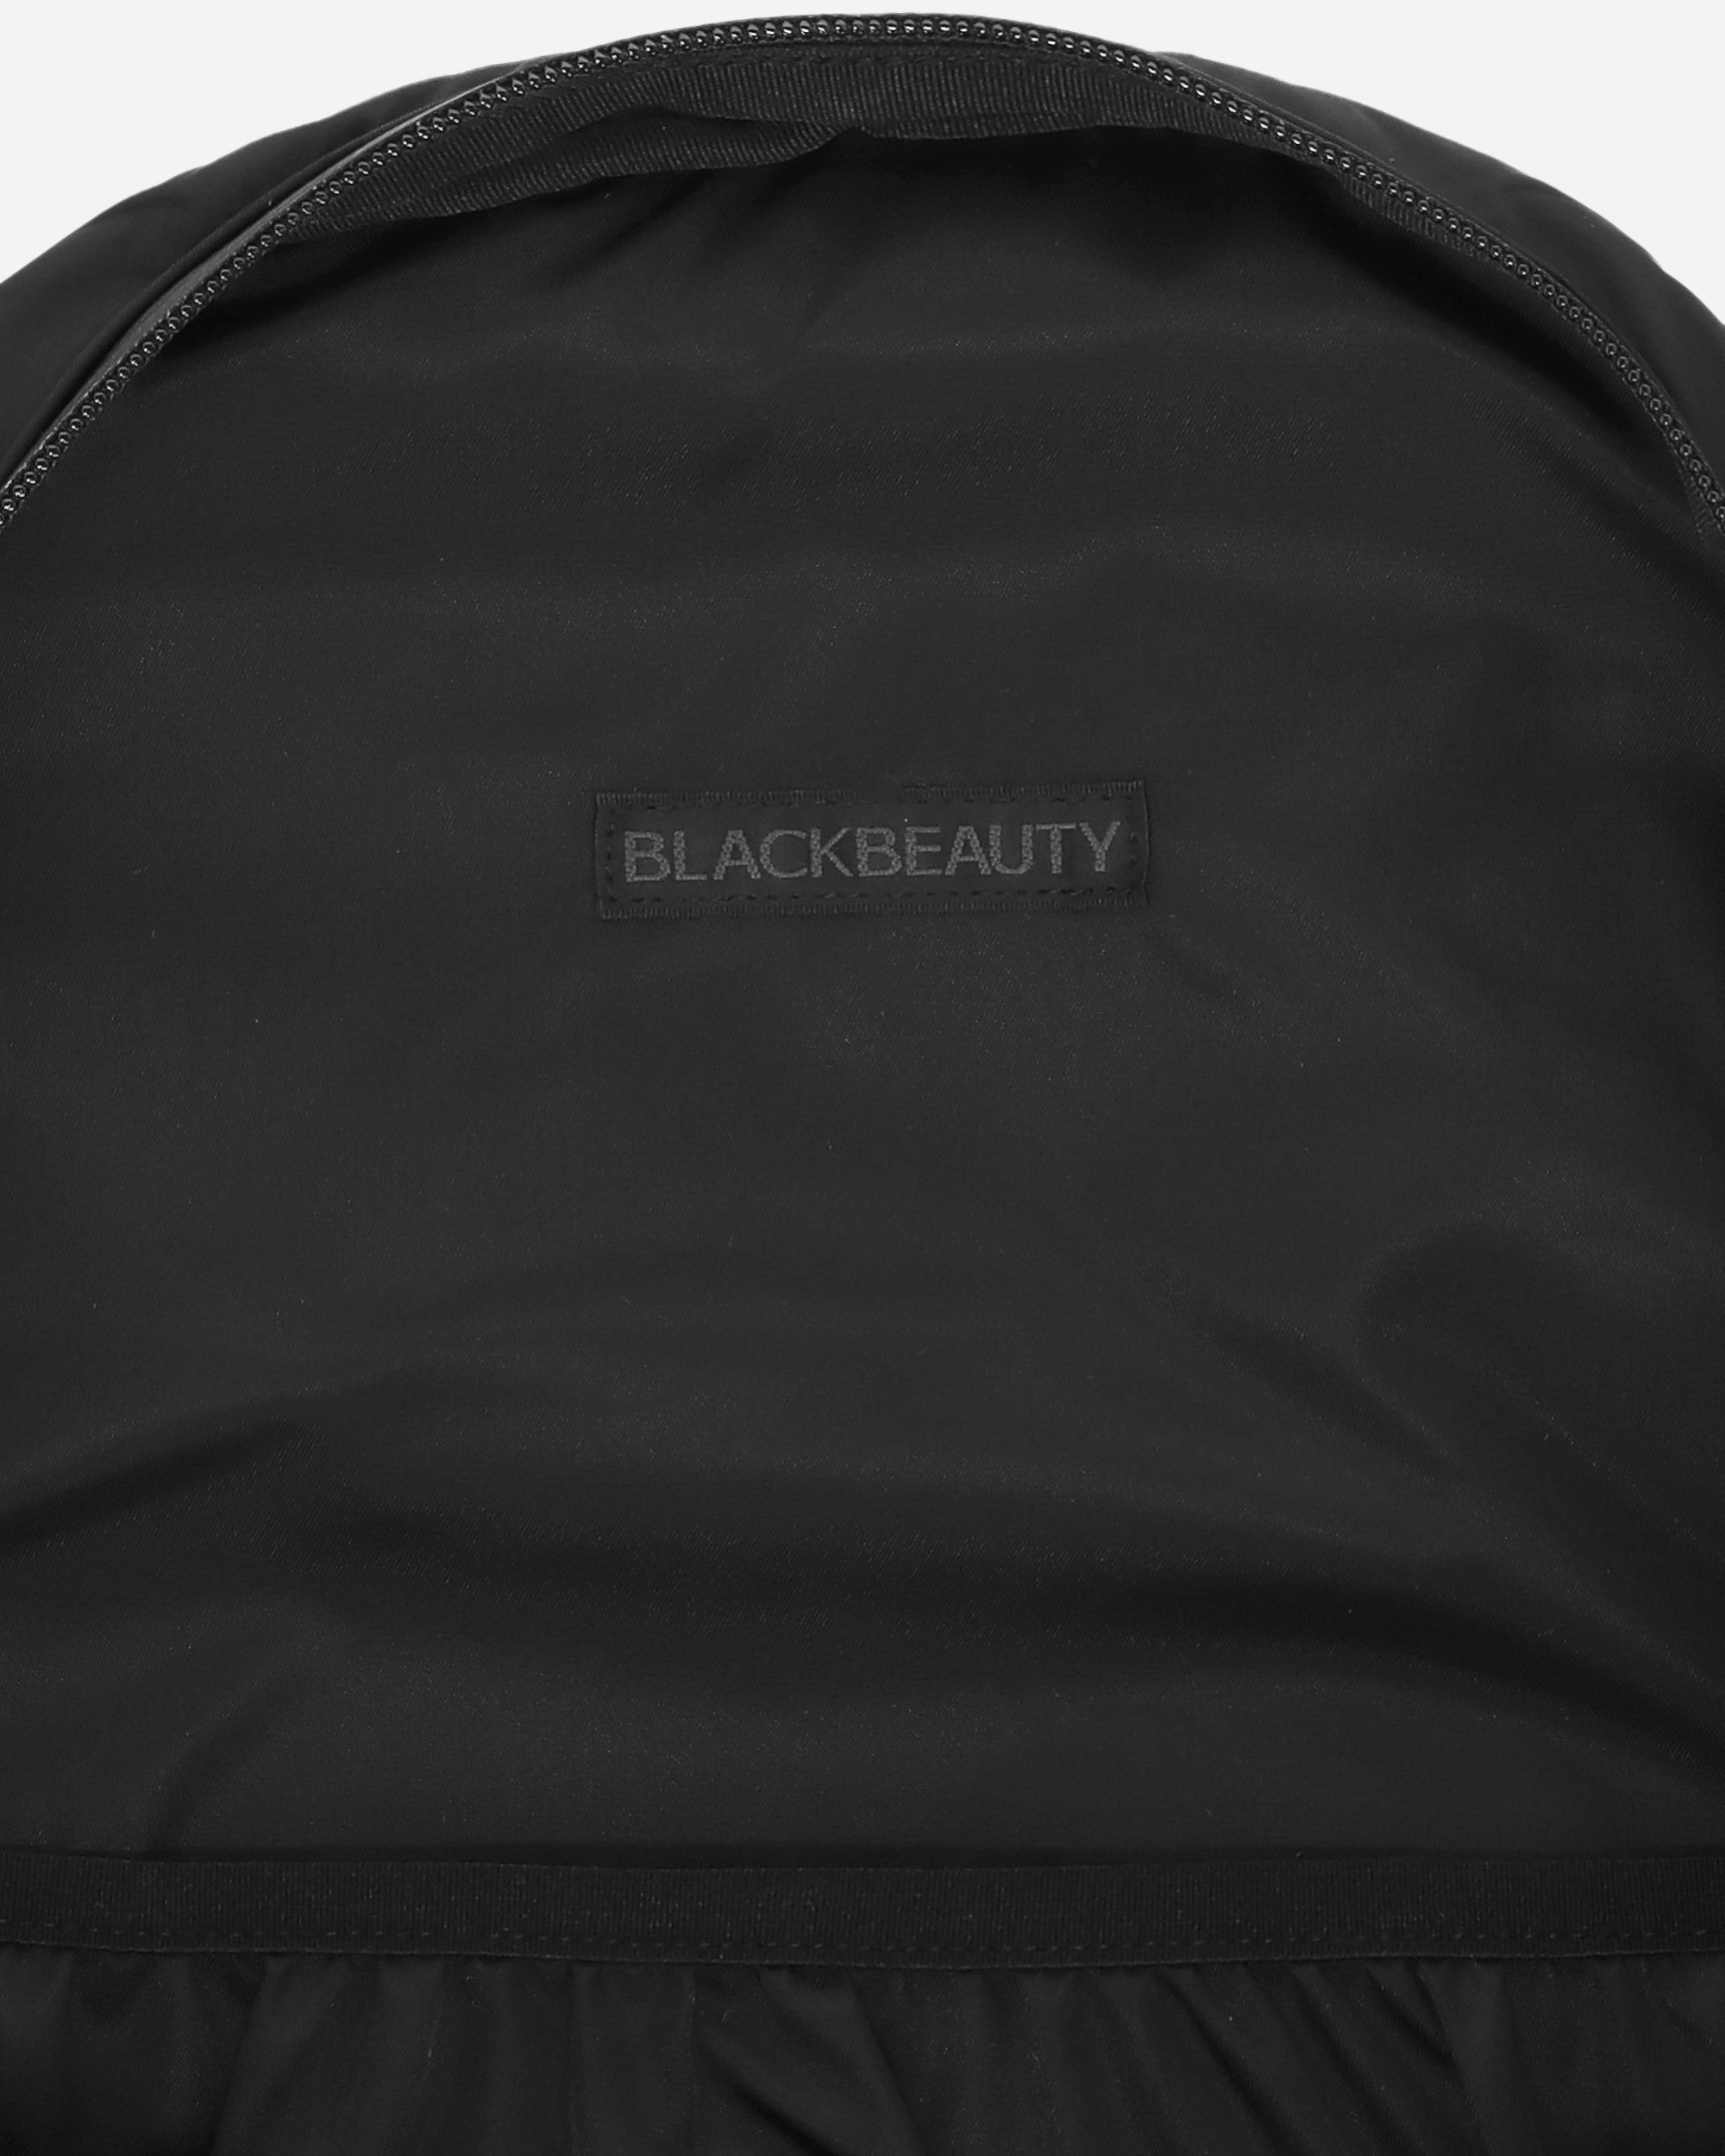 Ramidus Wallet X Fragment Design Black Bags and Backpacks Backpacks B017002  001